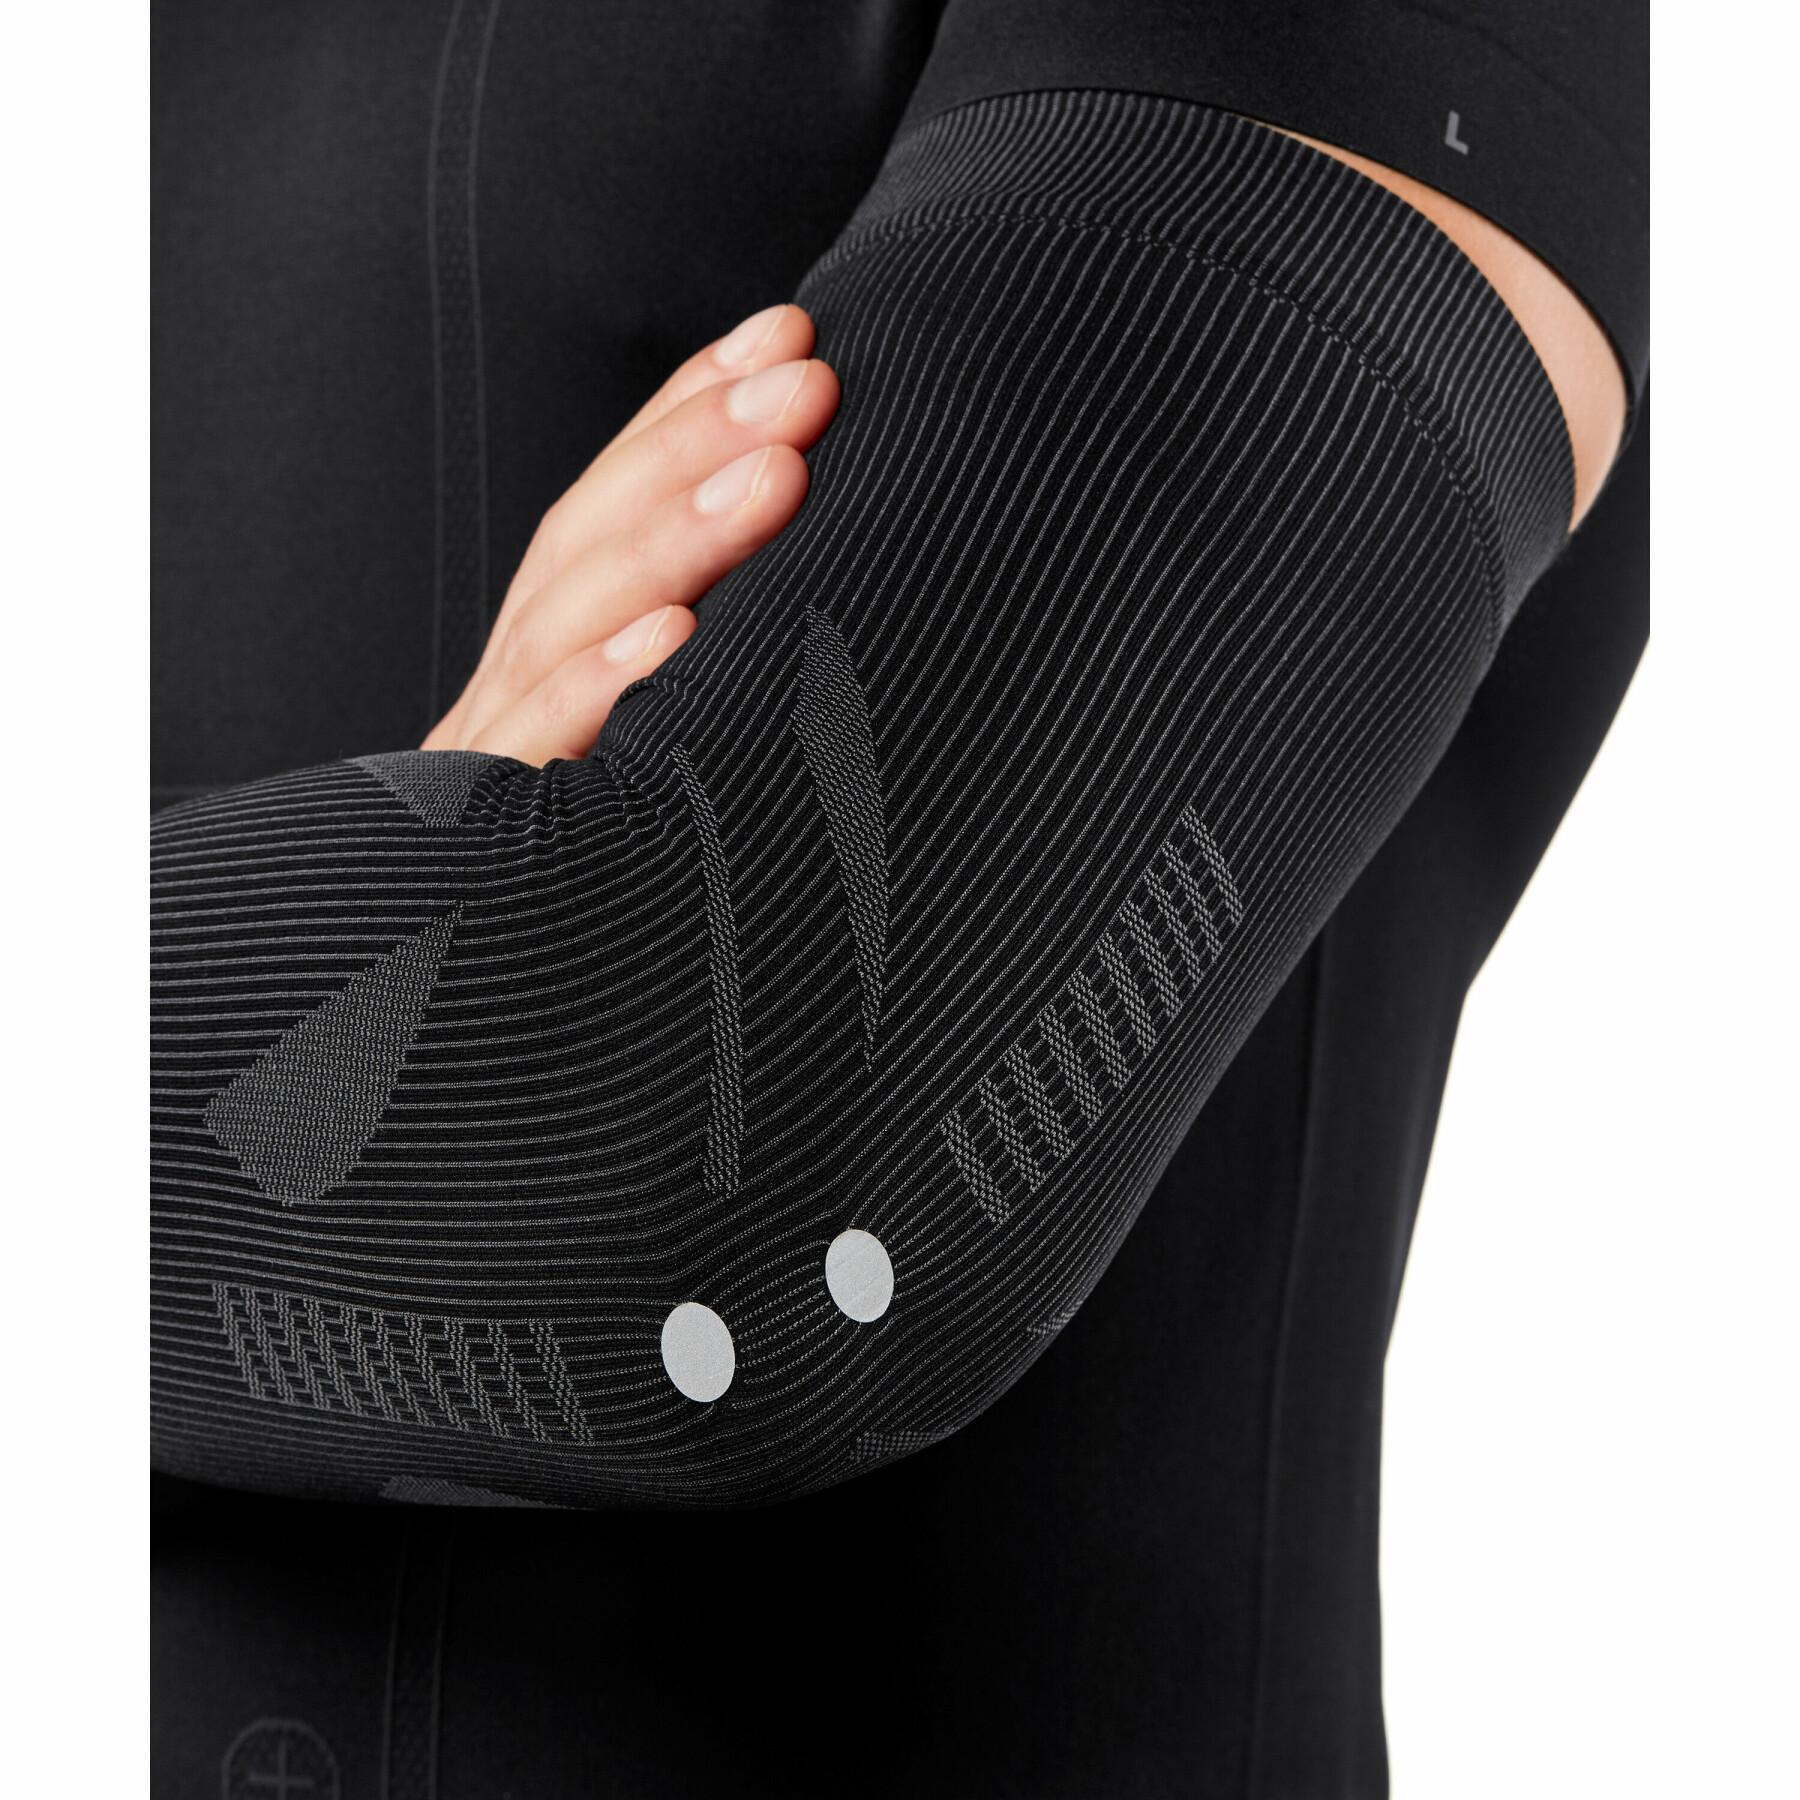 Mixed sleeves Falke Arm Protecteur d'UV